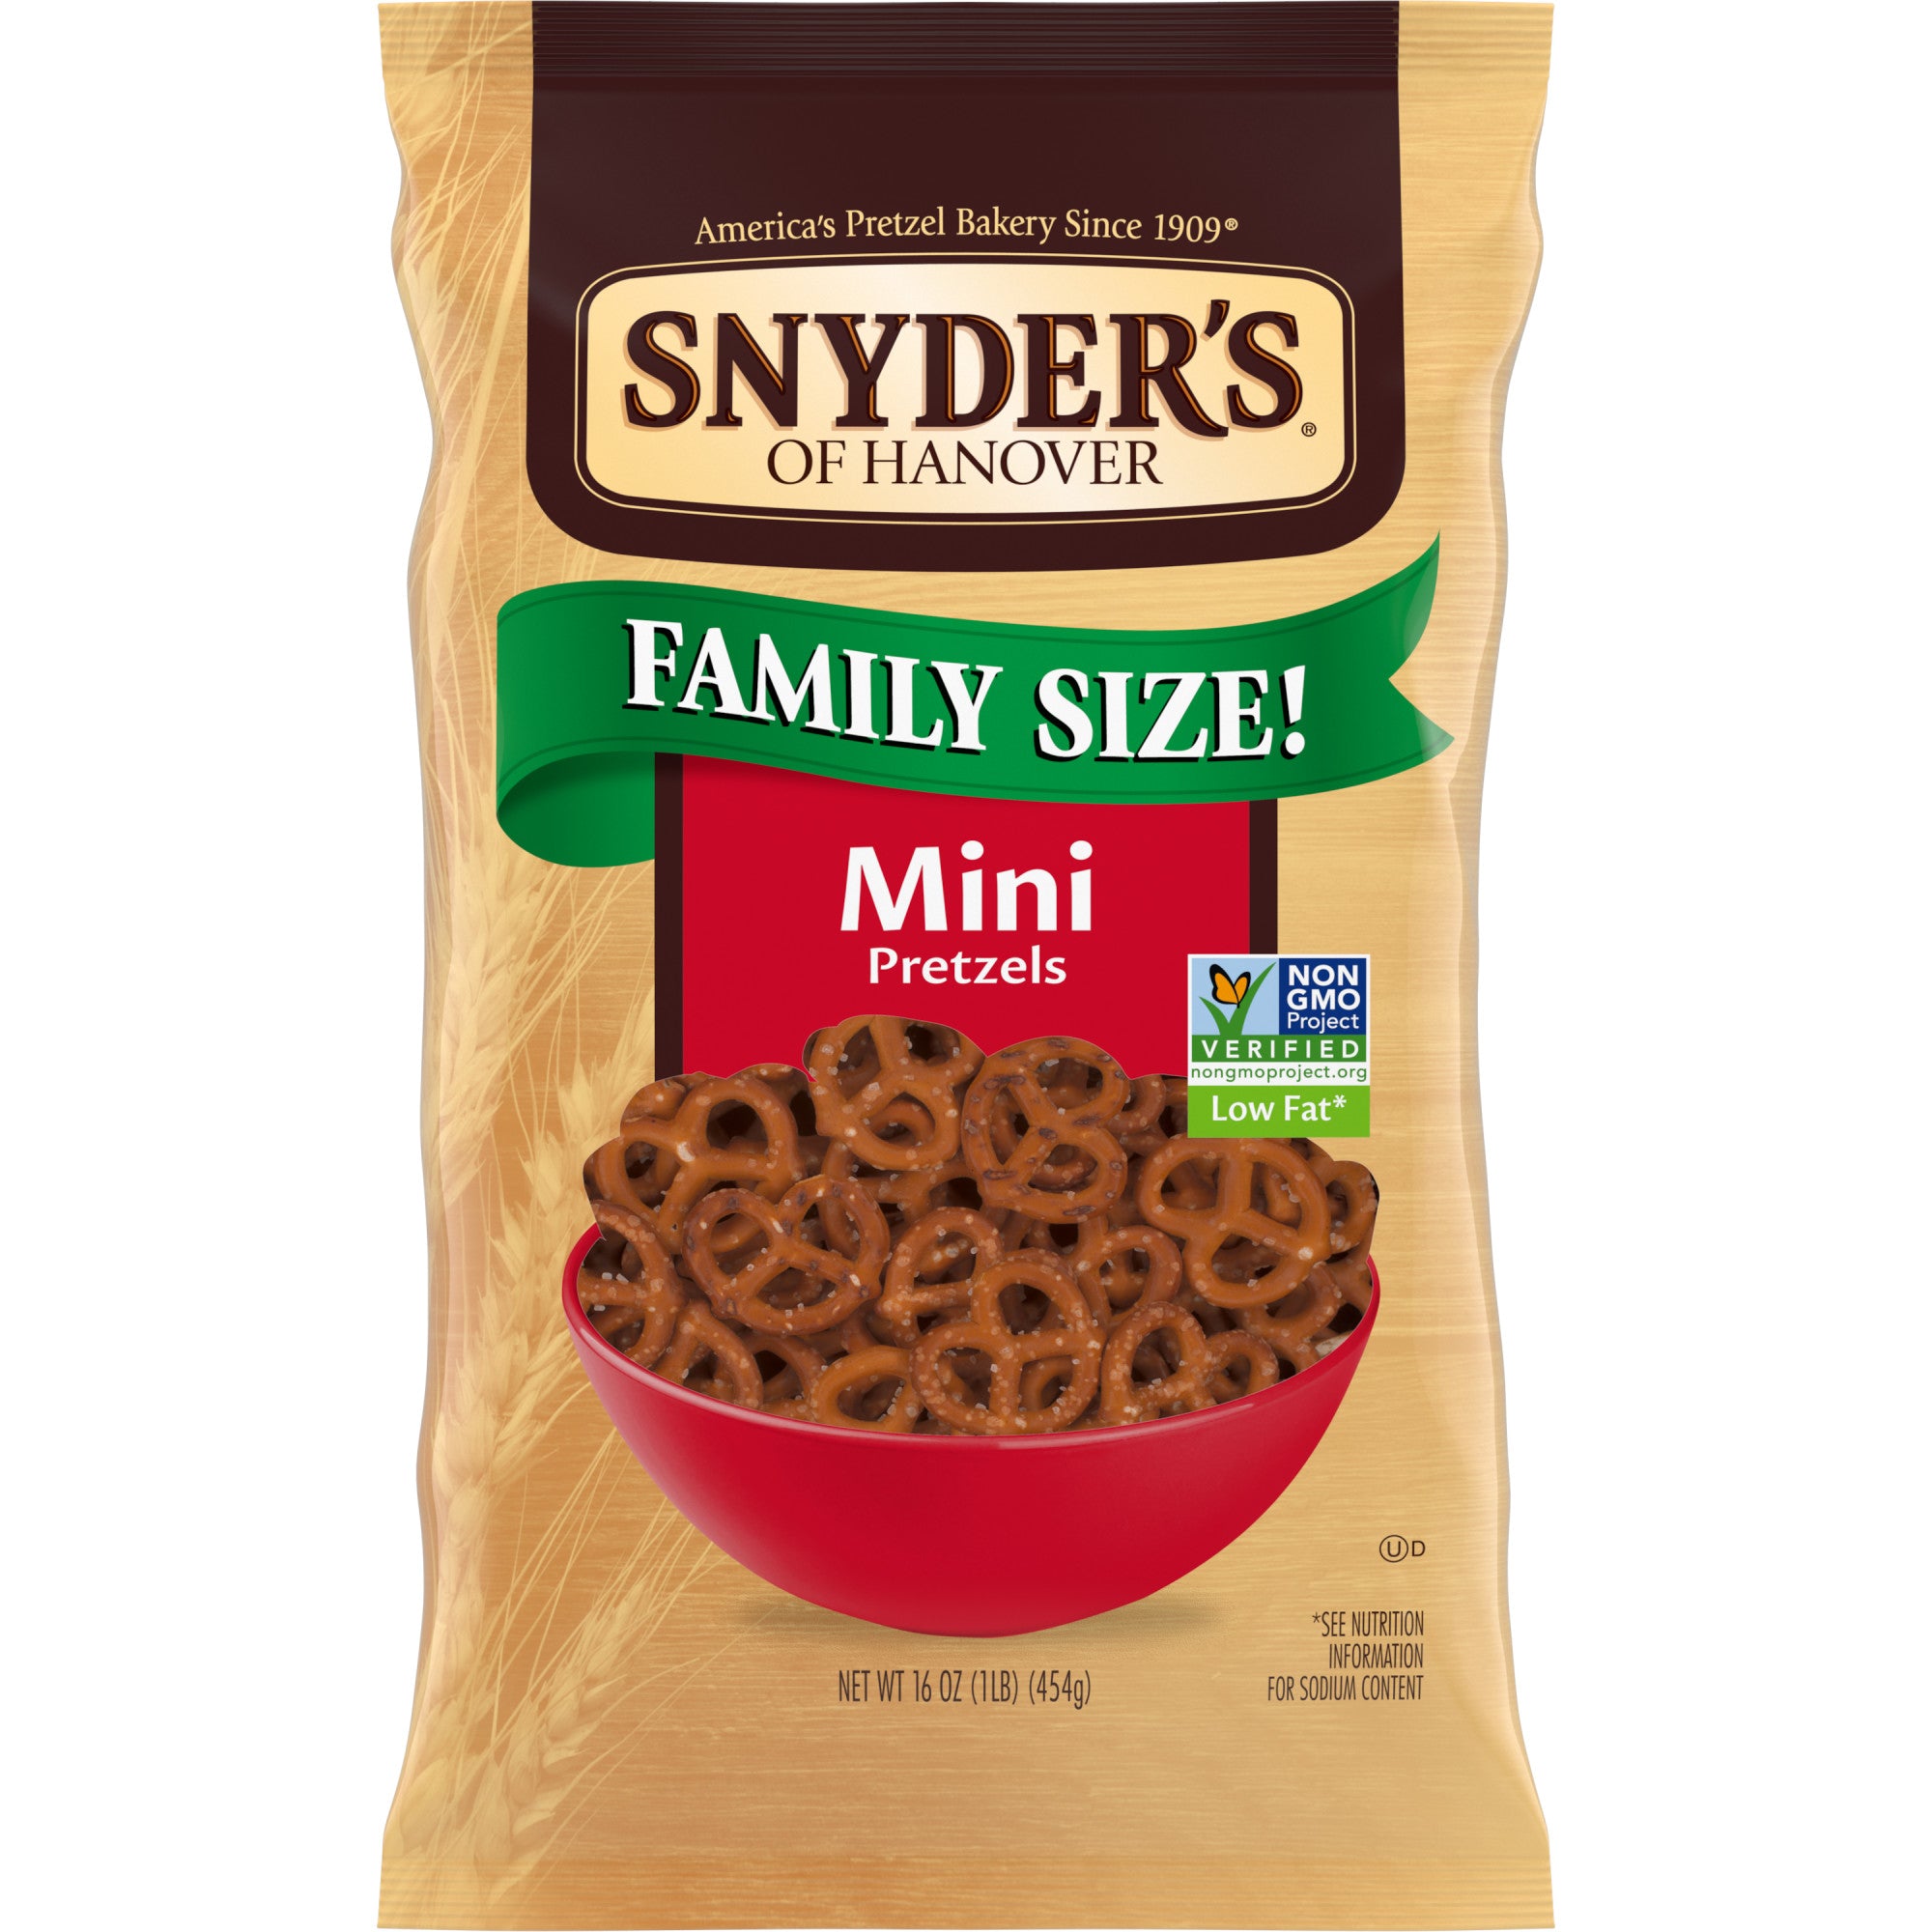 Snyder's of Hanover Pretzels, Mini Pretzels, Family Size